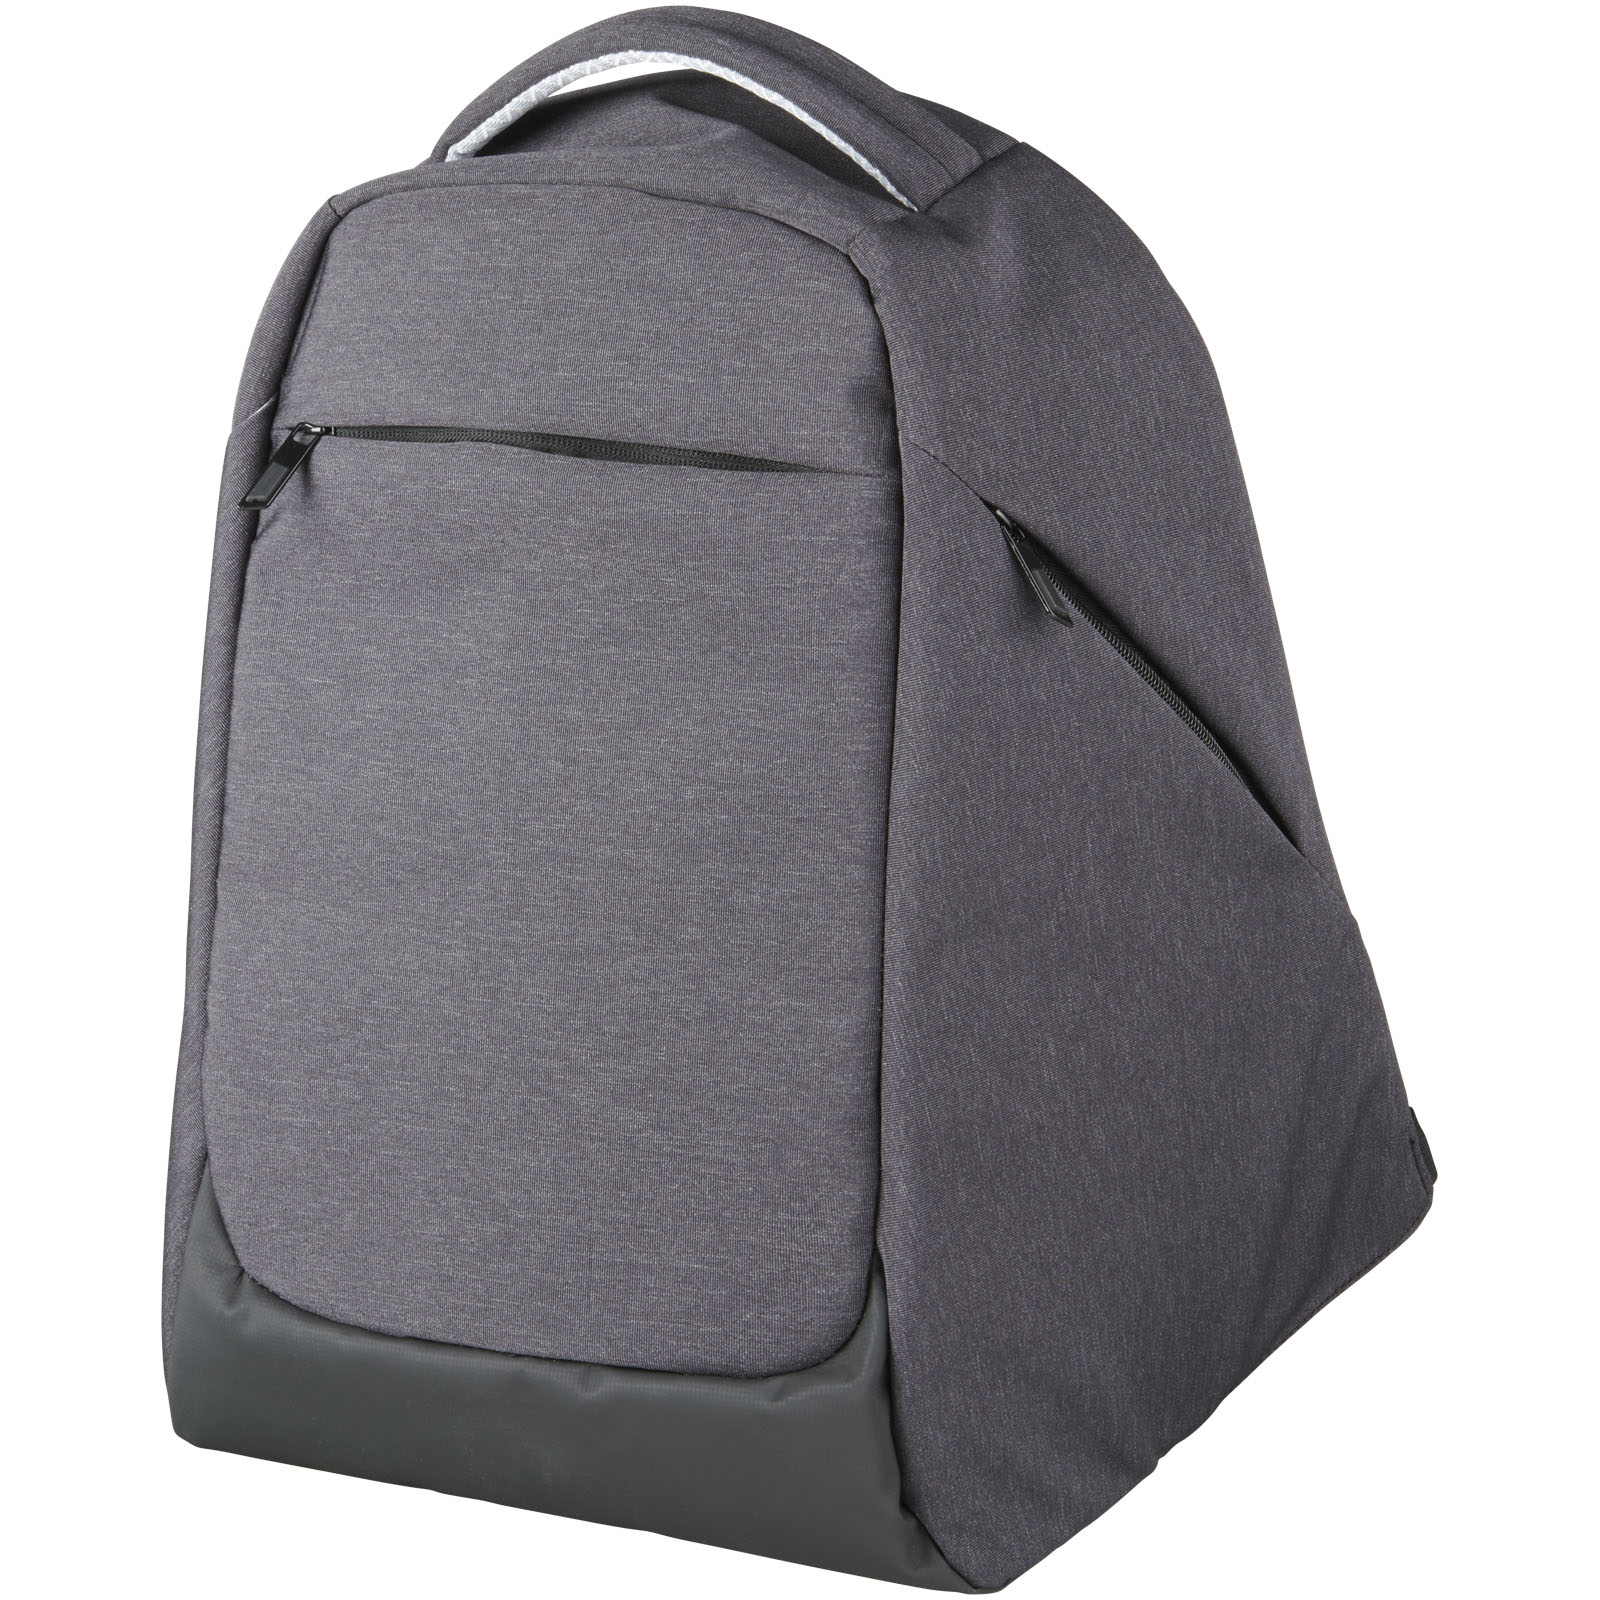 SecureTech Backpack - Ambleside - Parr Fold